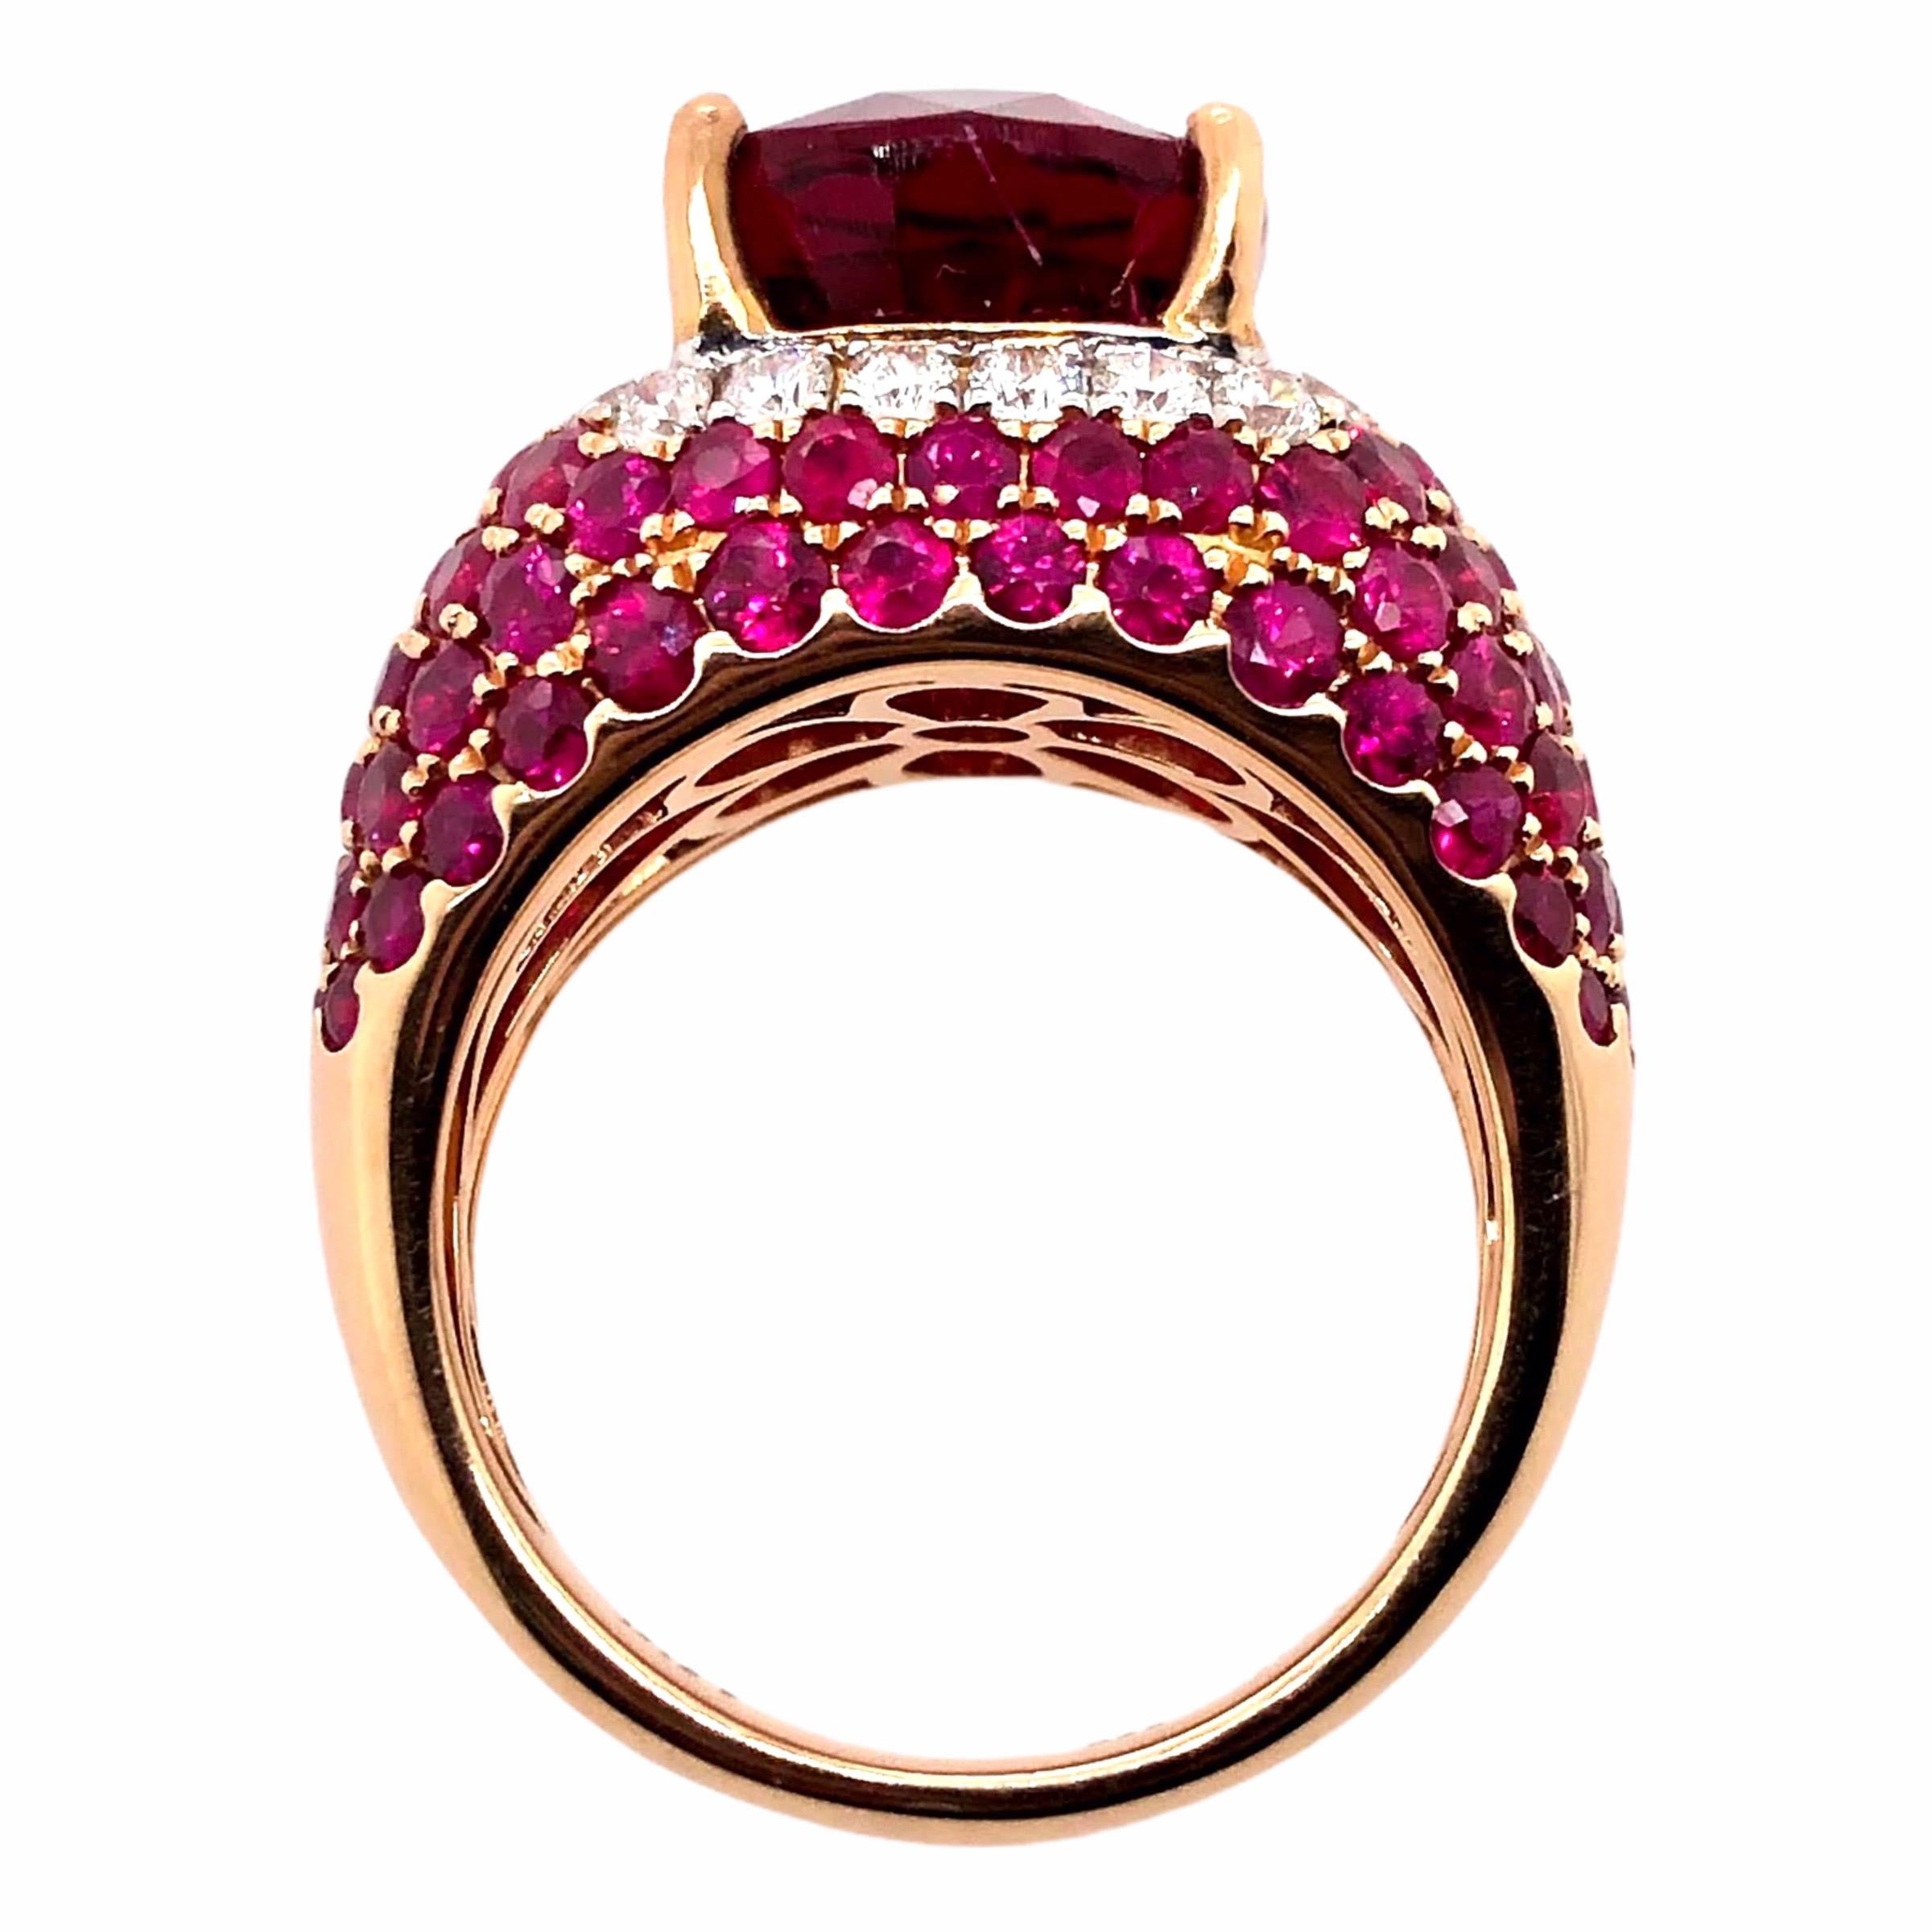 Oval Cut Paris Craft House 6.21 Carat Rubellite Ruby Diamond Ring in 18 Karat Rose Gold For Sale